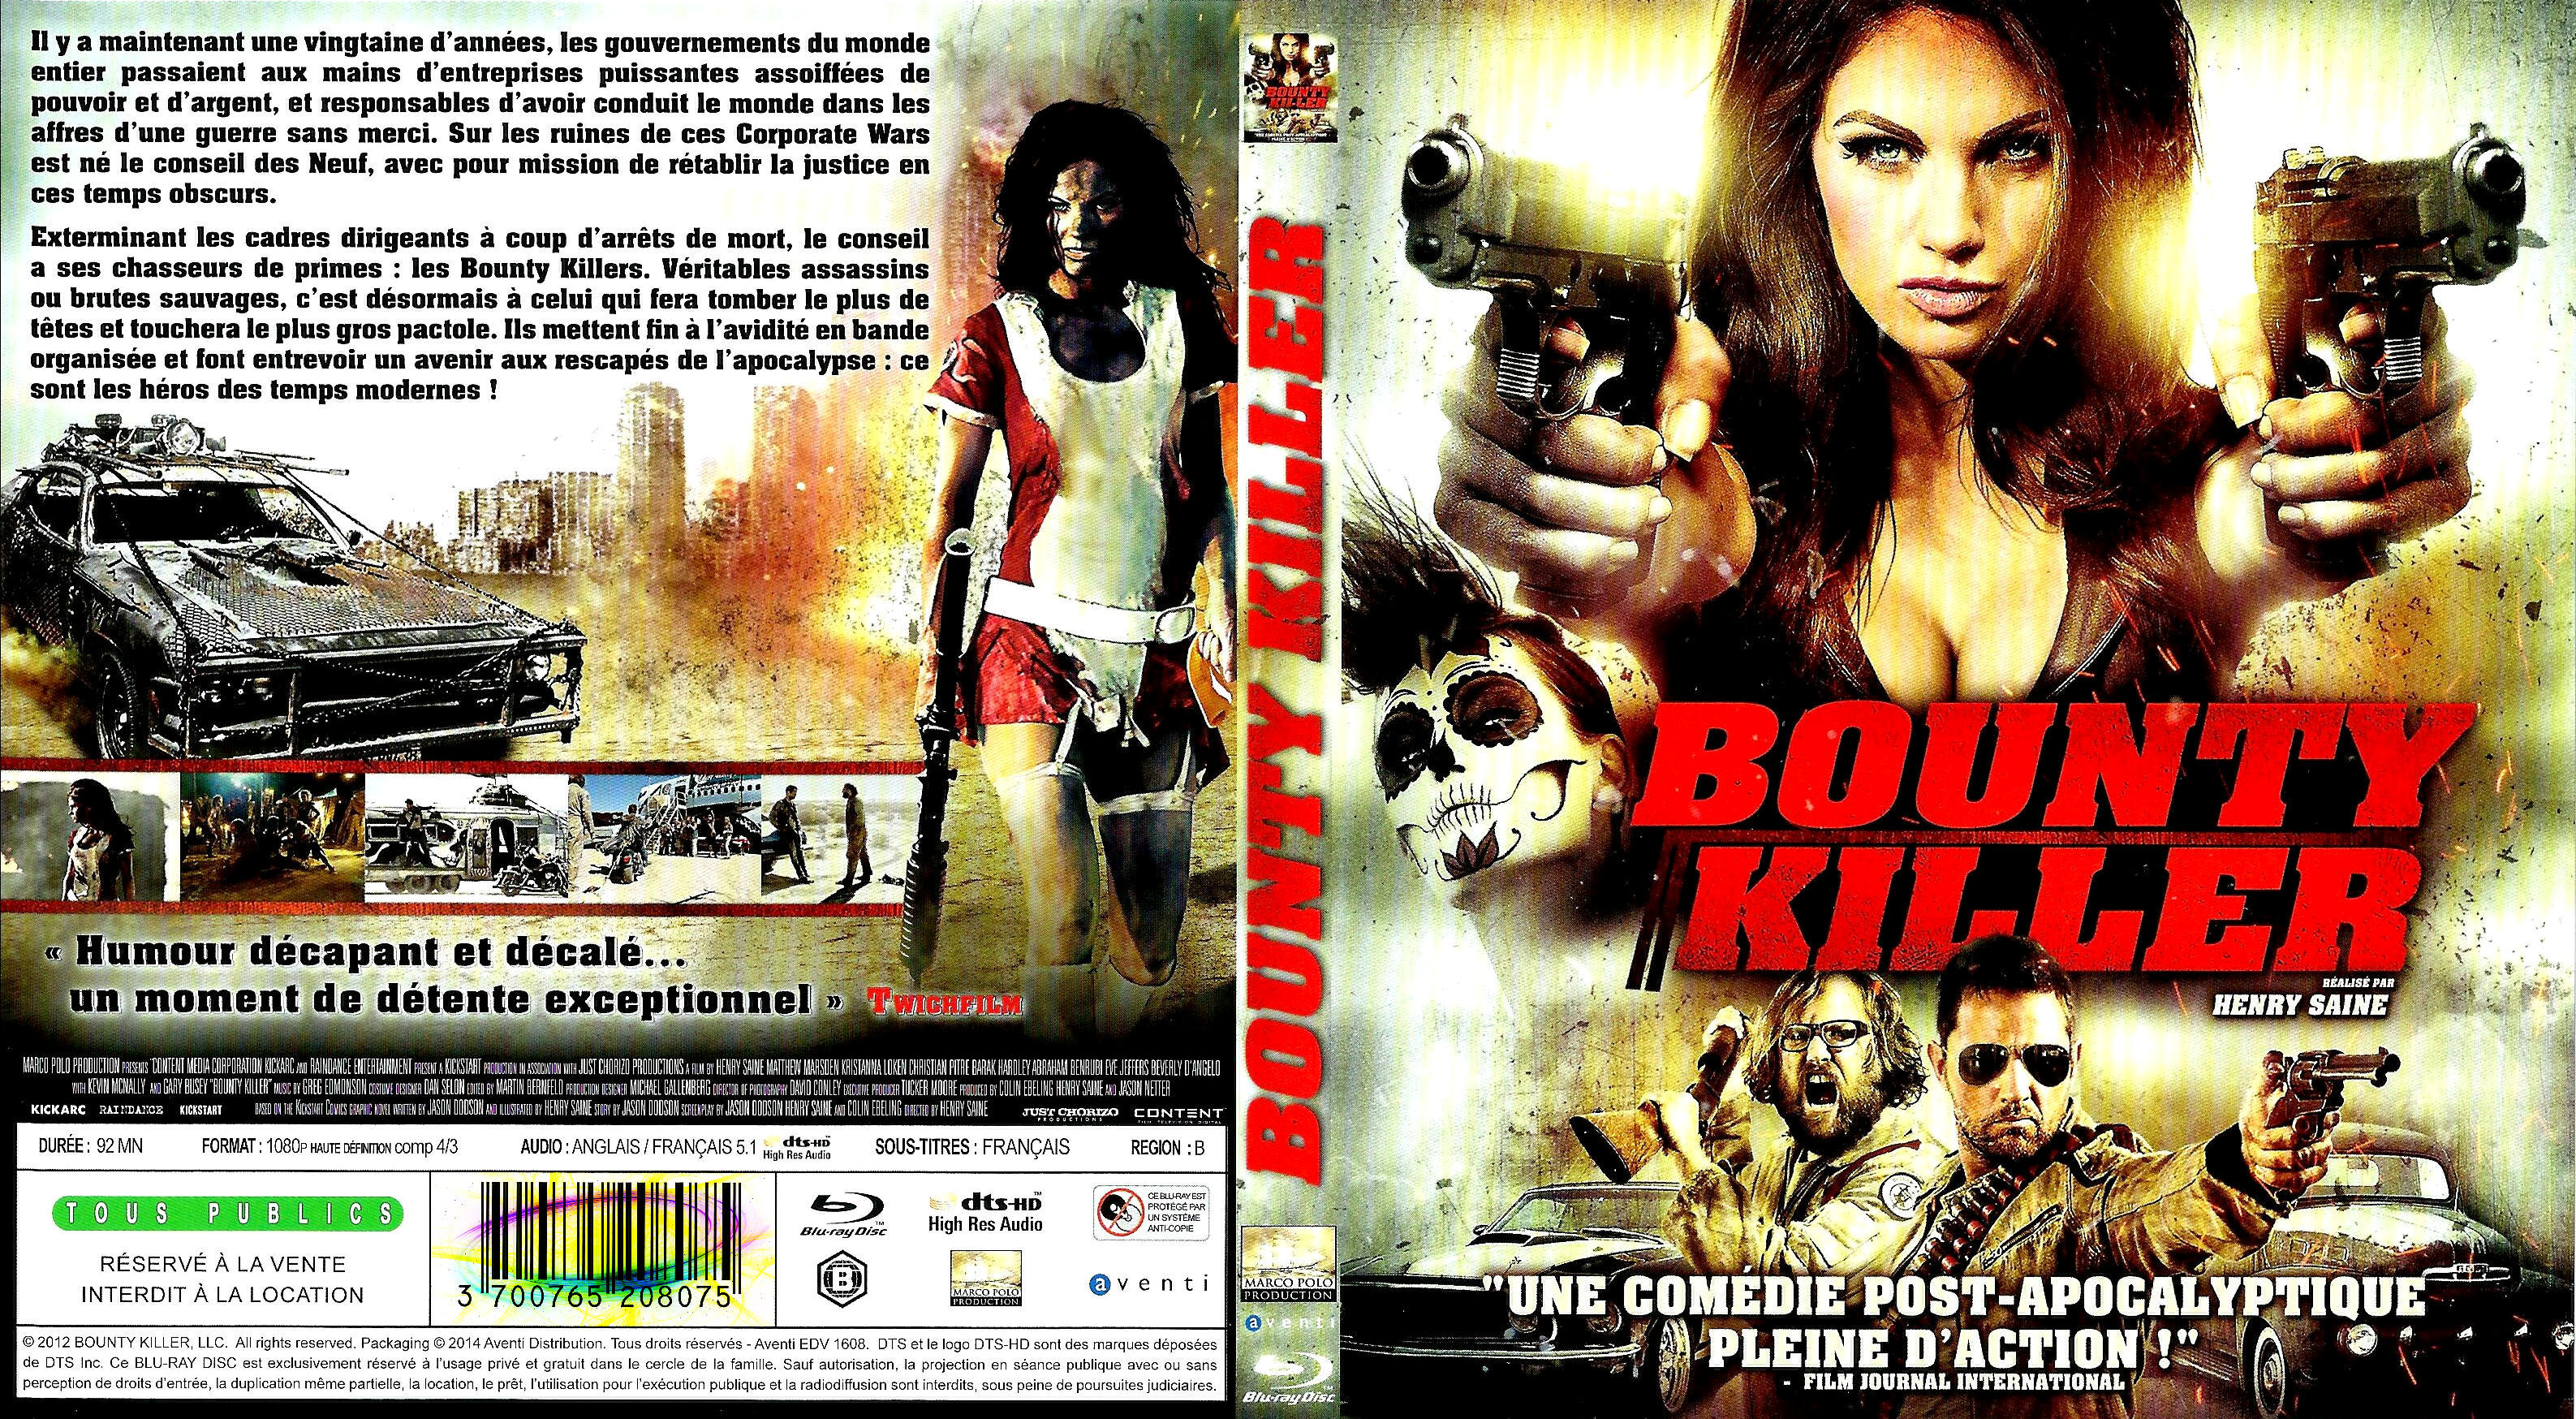 Jaquette DVD Bounty killer (BLU-RAY)